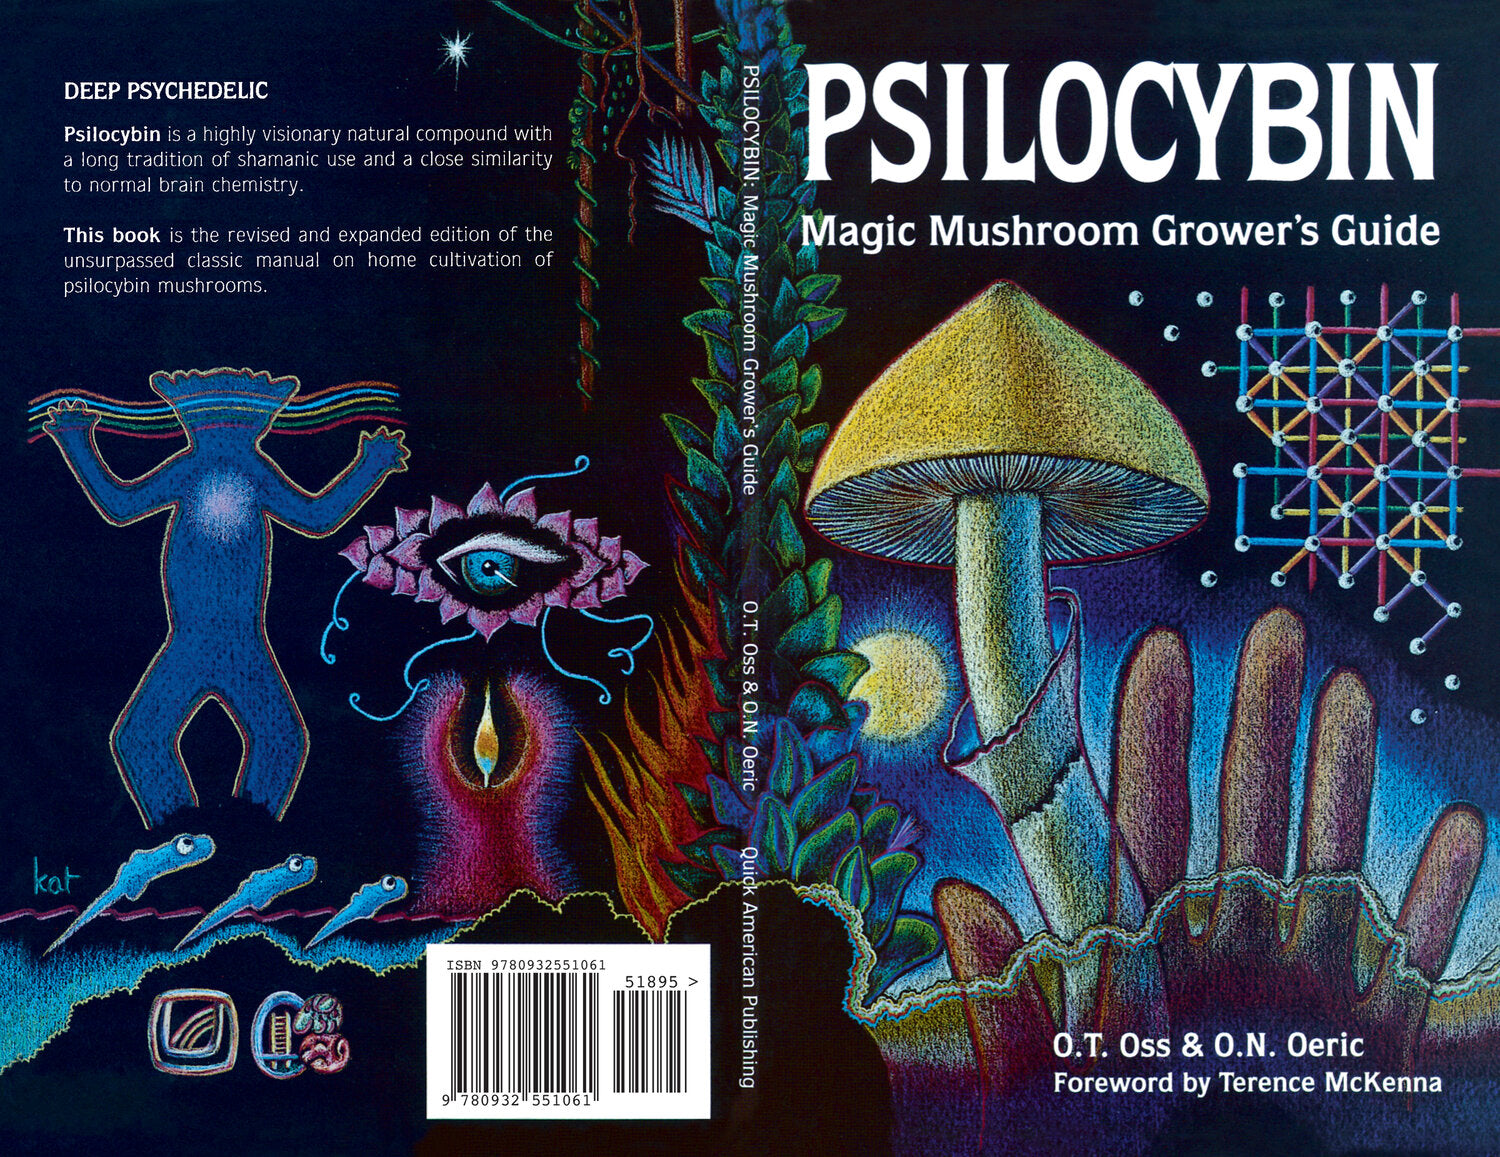 PSILOCYBIN: MAGIC MUSHROOM GROWER'S GUIDE - By Terence McKenna